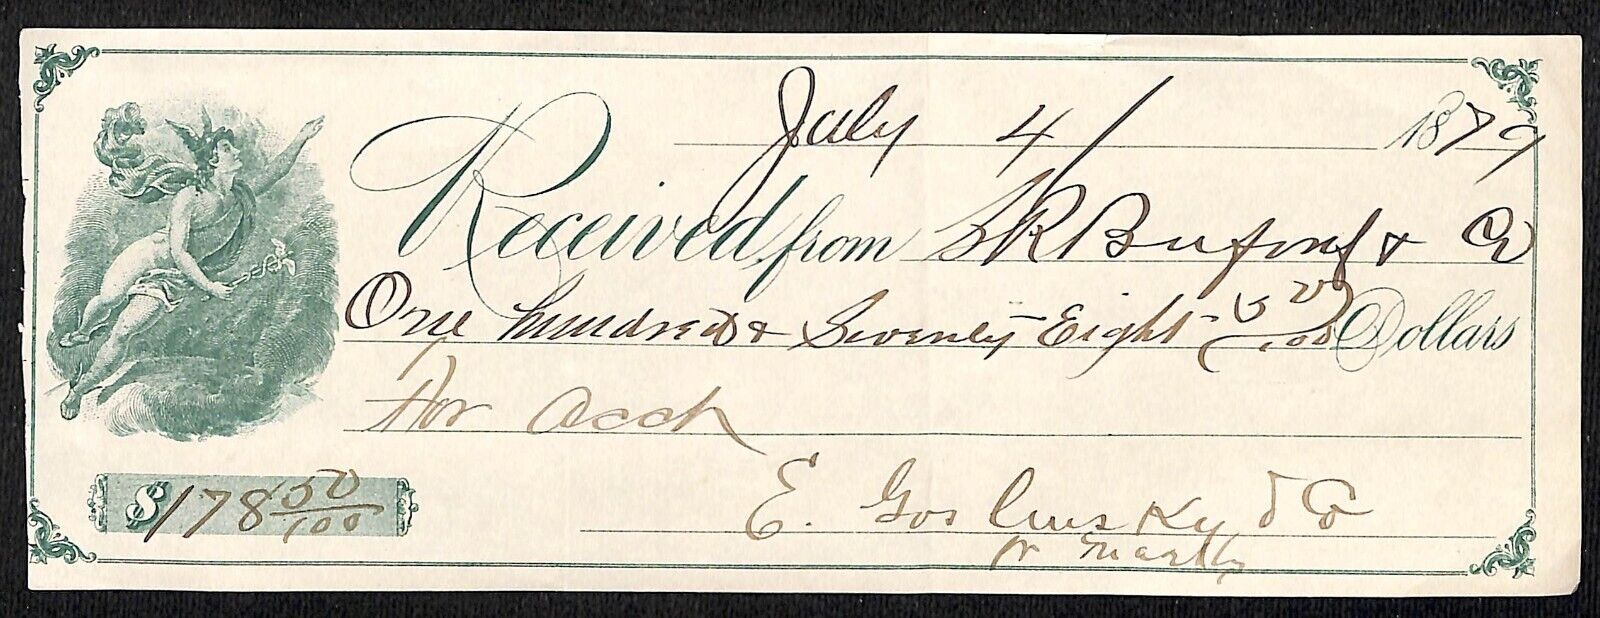 Virginia City Montana S.R. Buford / 1879 $178.50 Payment Receipt